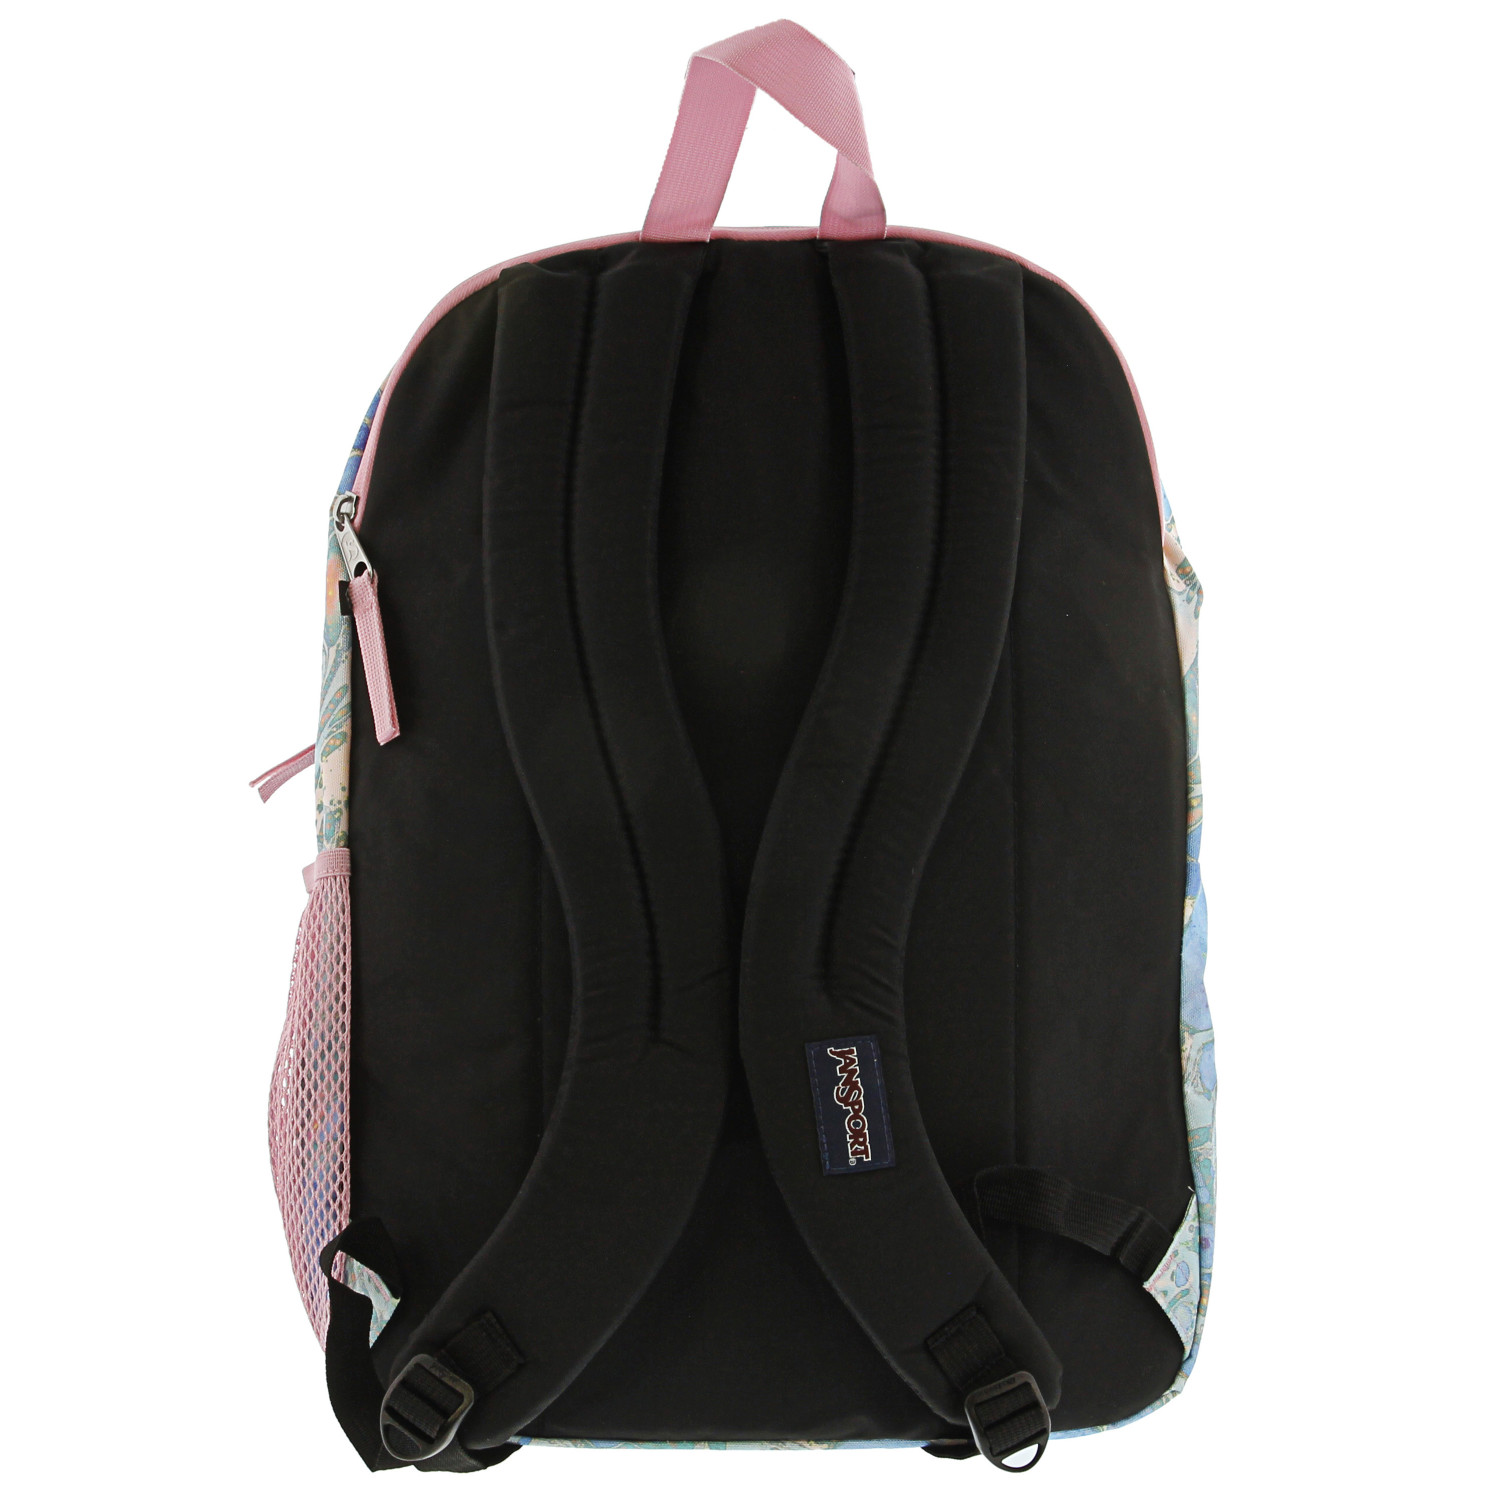 JanSport Big Student Polyester Backpack - Pastel Marble - image 3 of 3